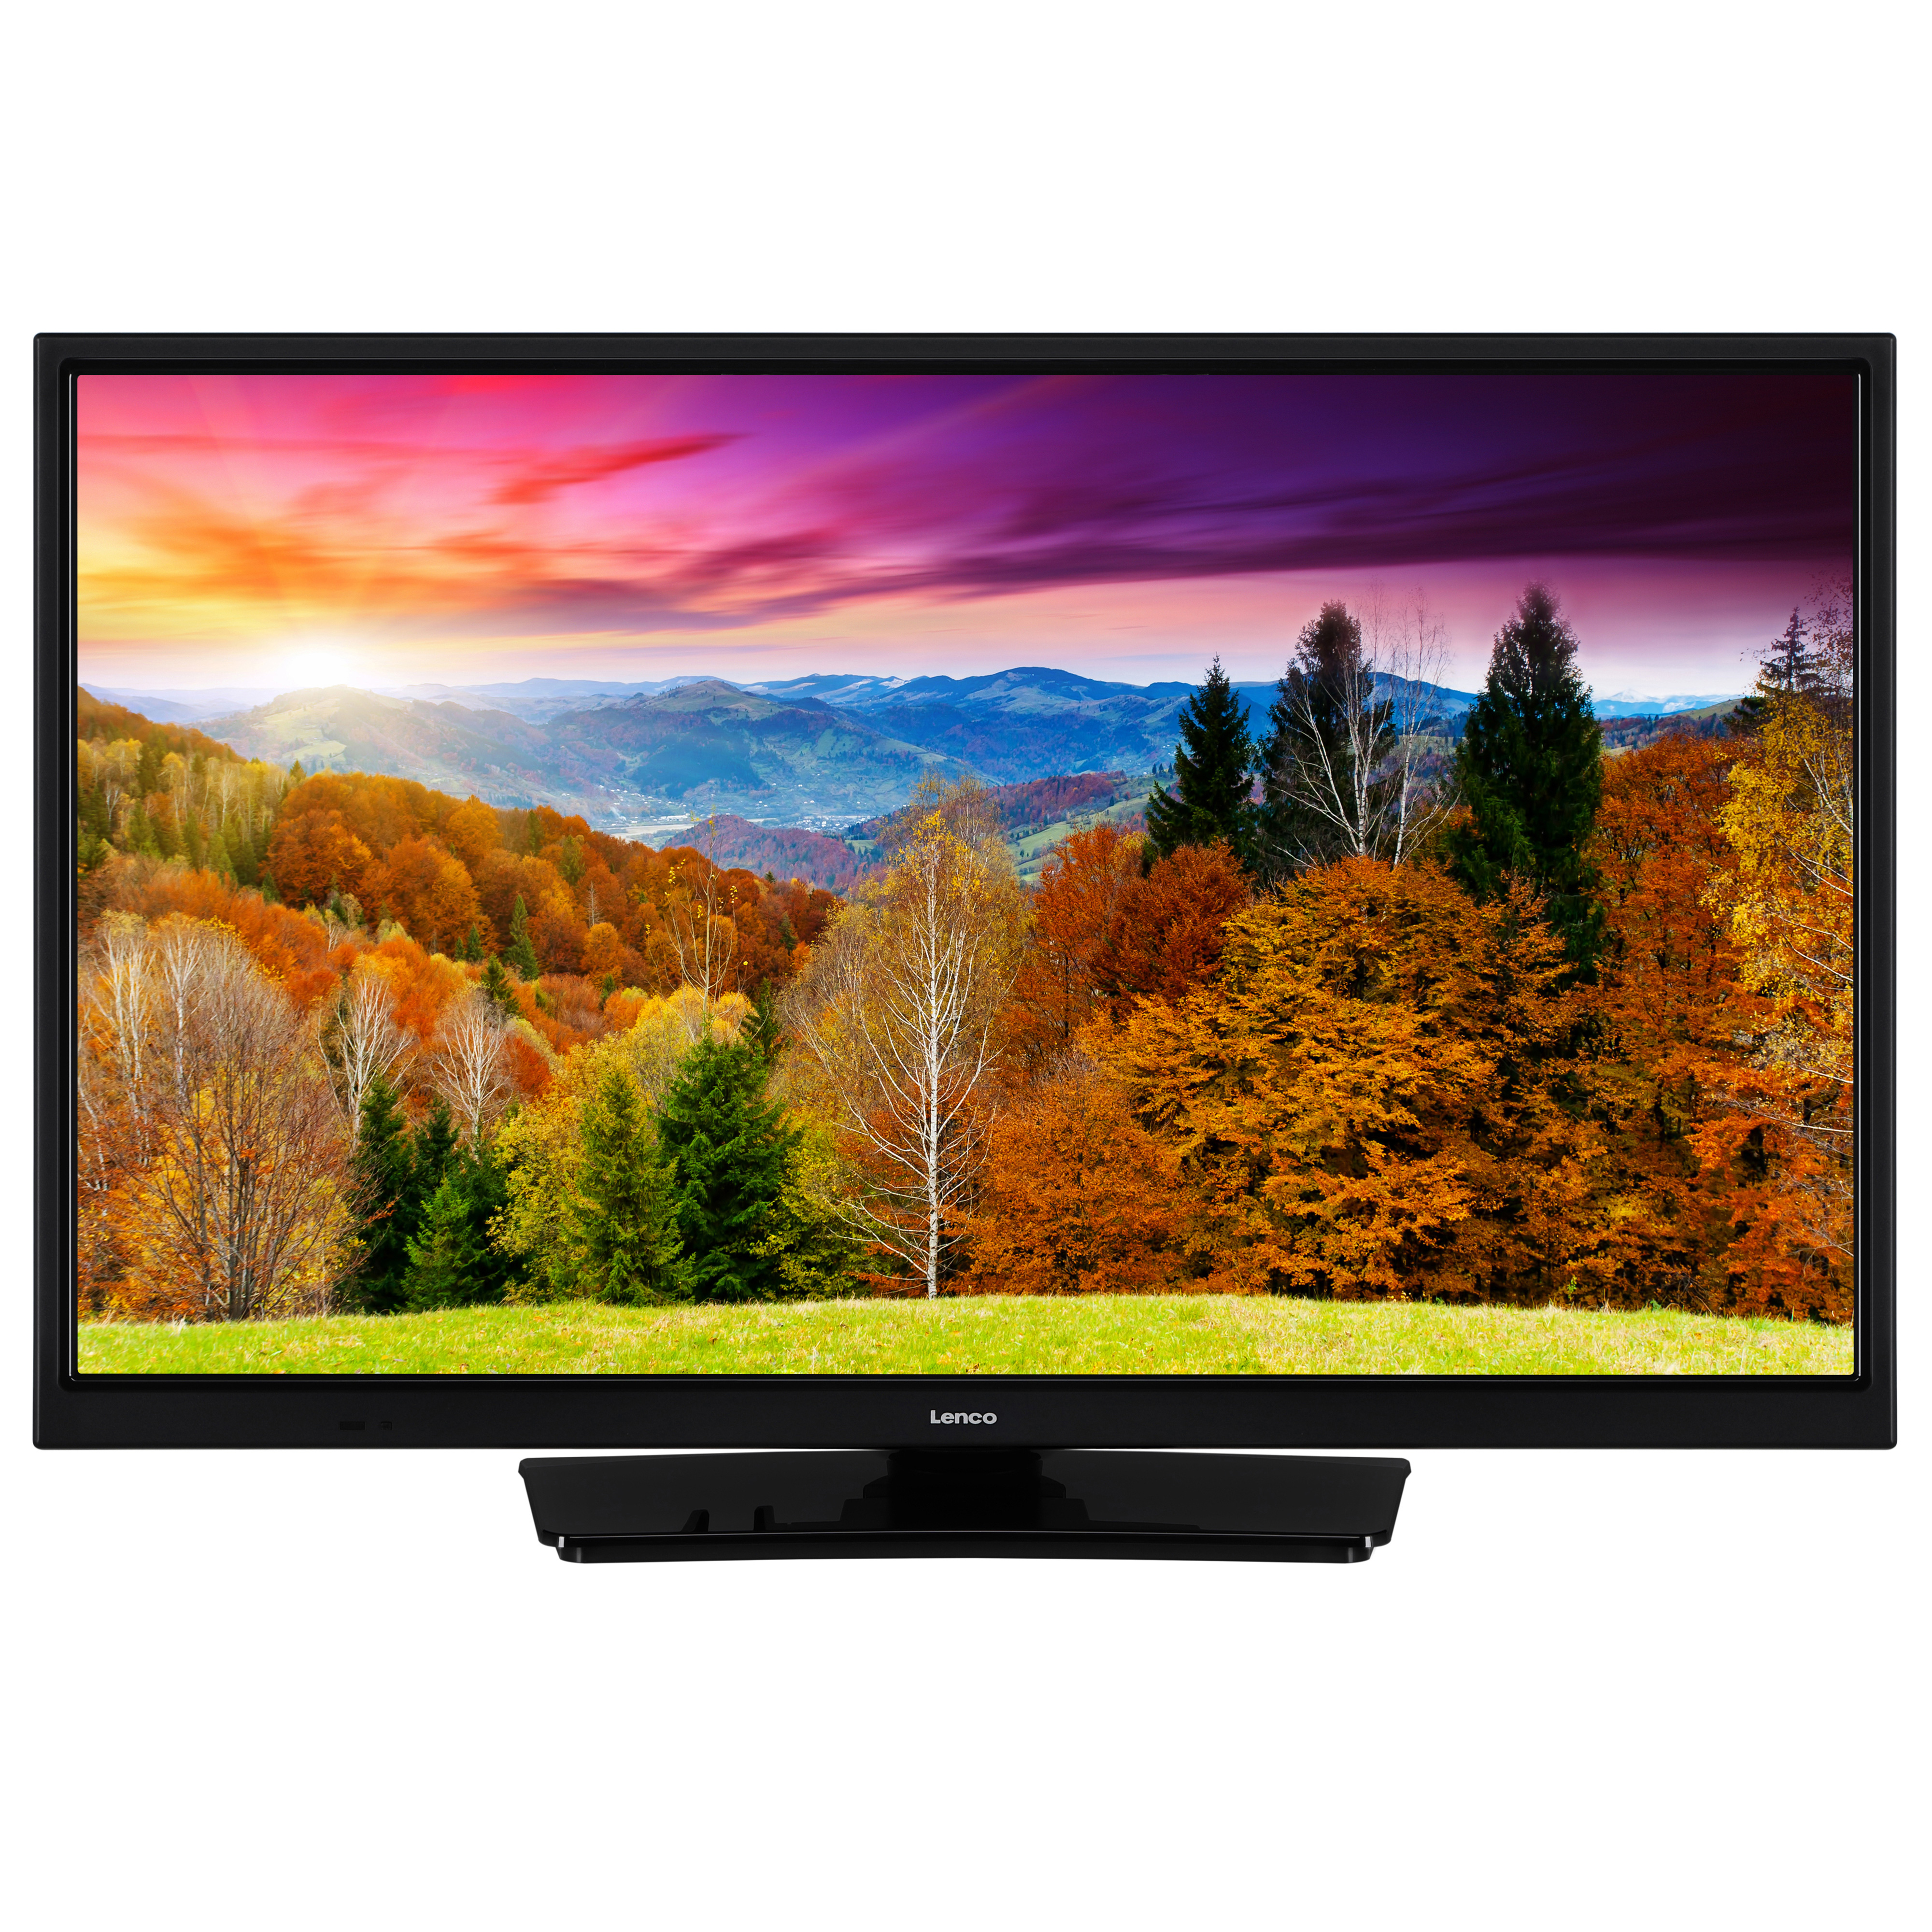 Android) HD, LED - 24 / Zoll Bluetooth LENCO mit (Flat, - 61 cm, LED-2463BK Fernseher TV